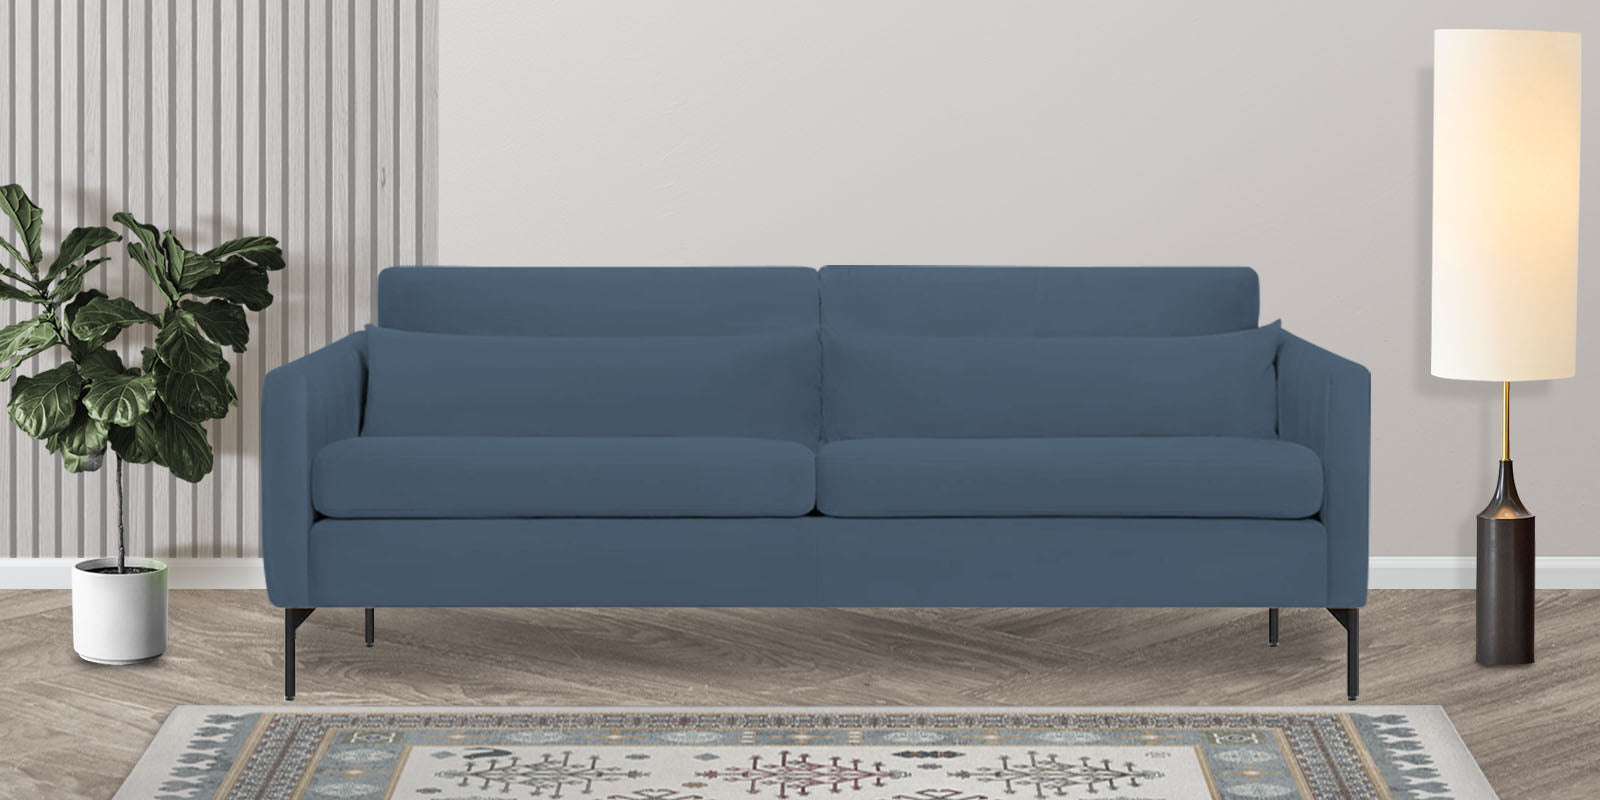 Haru Velvet 3 Seater Sofa in Oxford Blue Colour